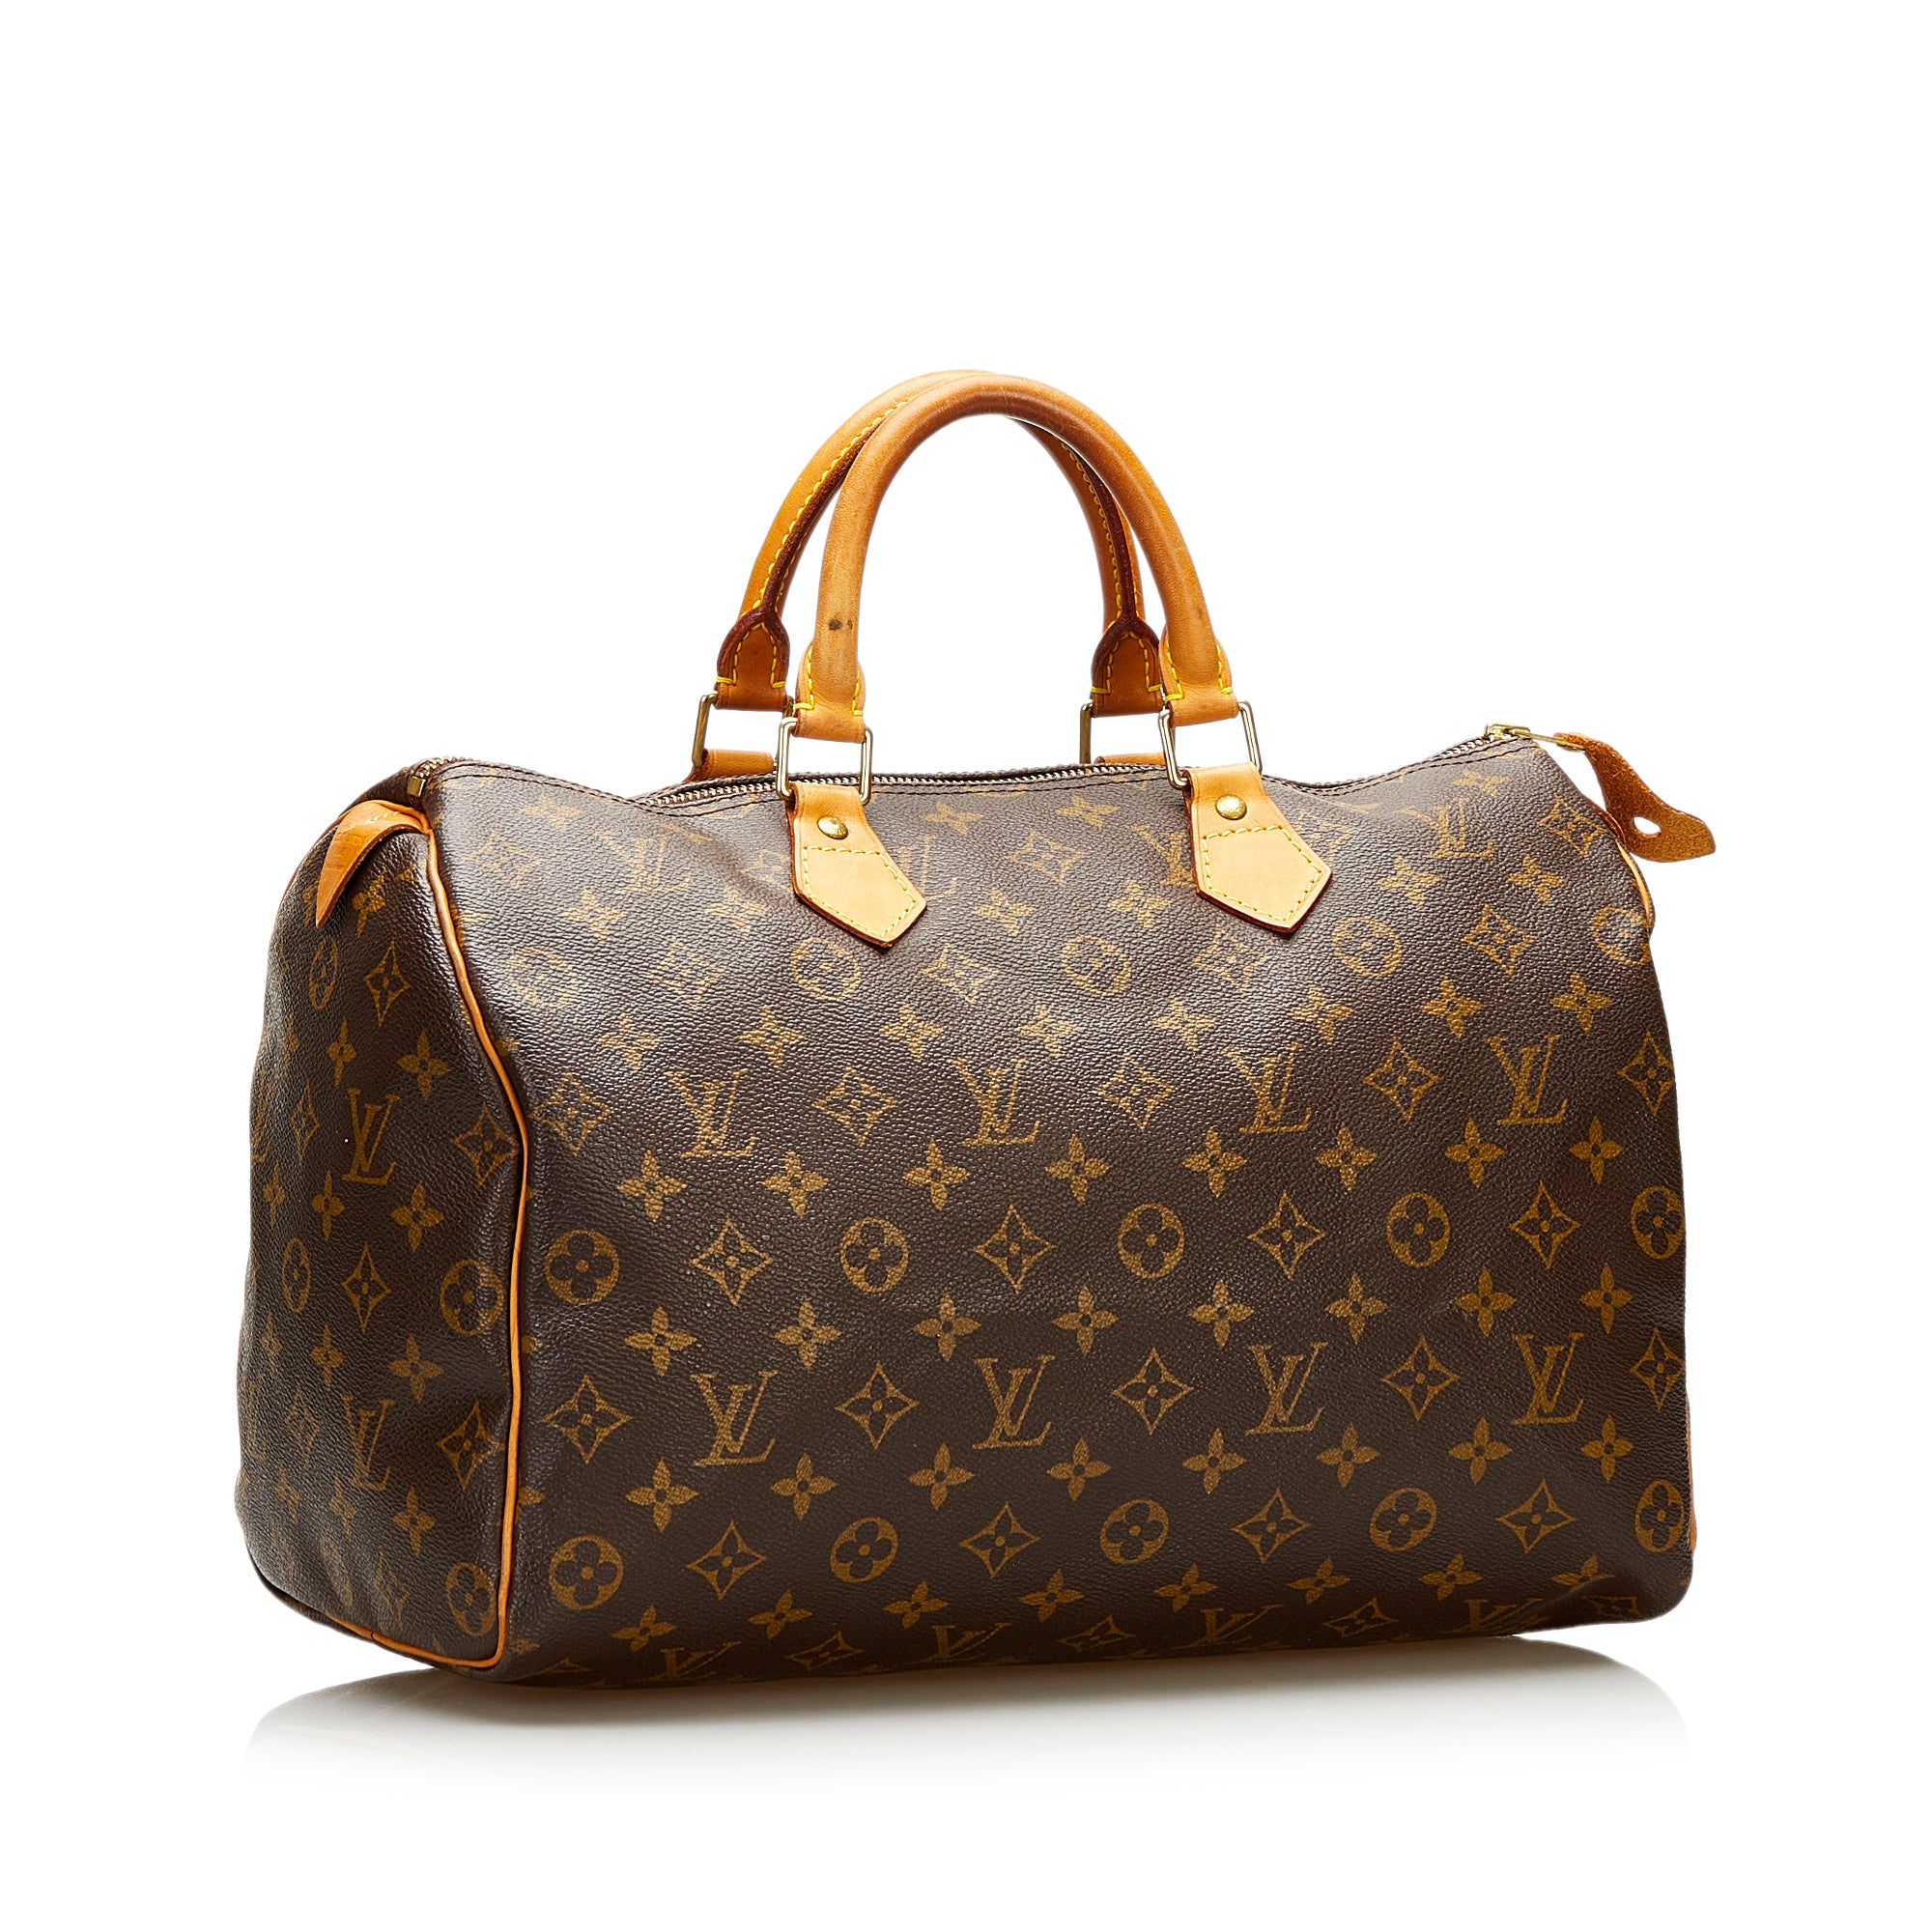 Louis Vuitton, Bags, New Louis Vuitton Mon Monogram Speedy 35